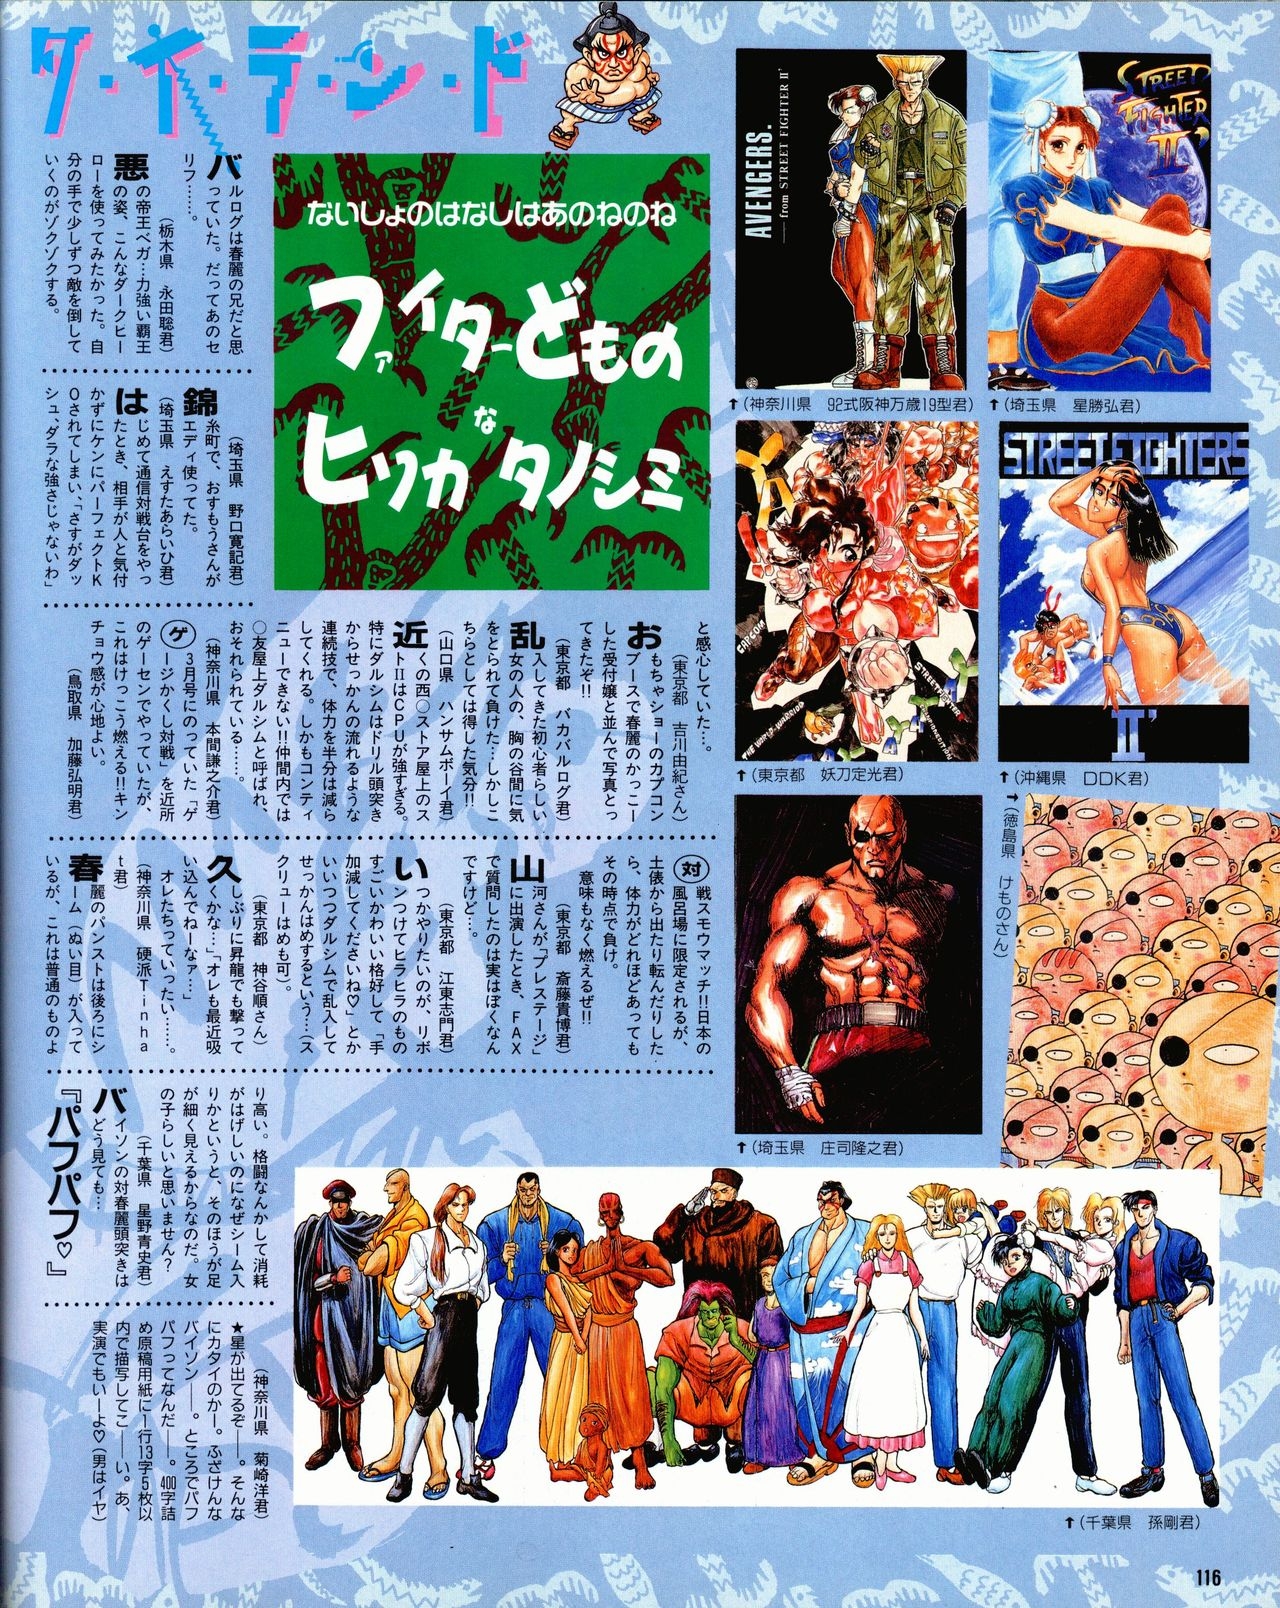 Street Fighter II Dash - Gamest special issue 77 117